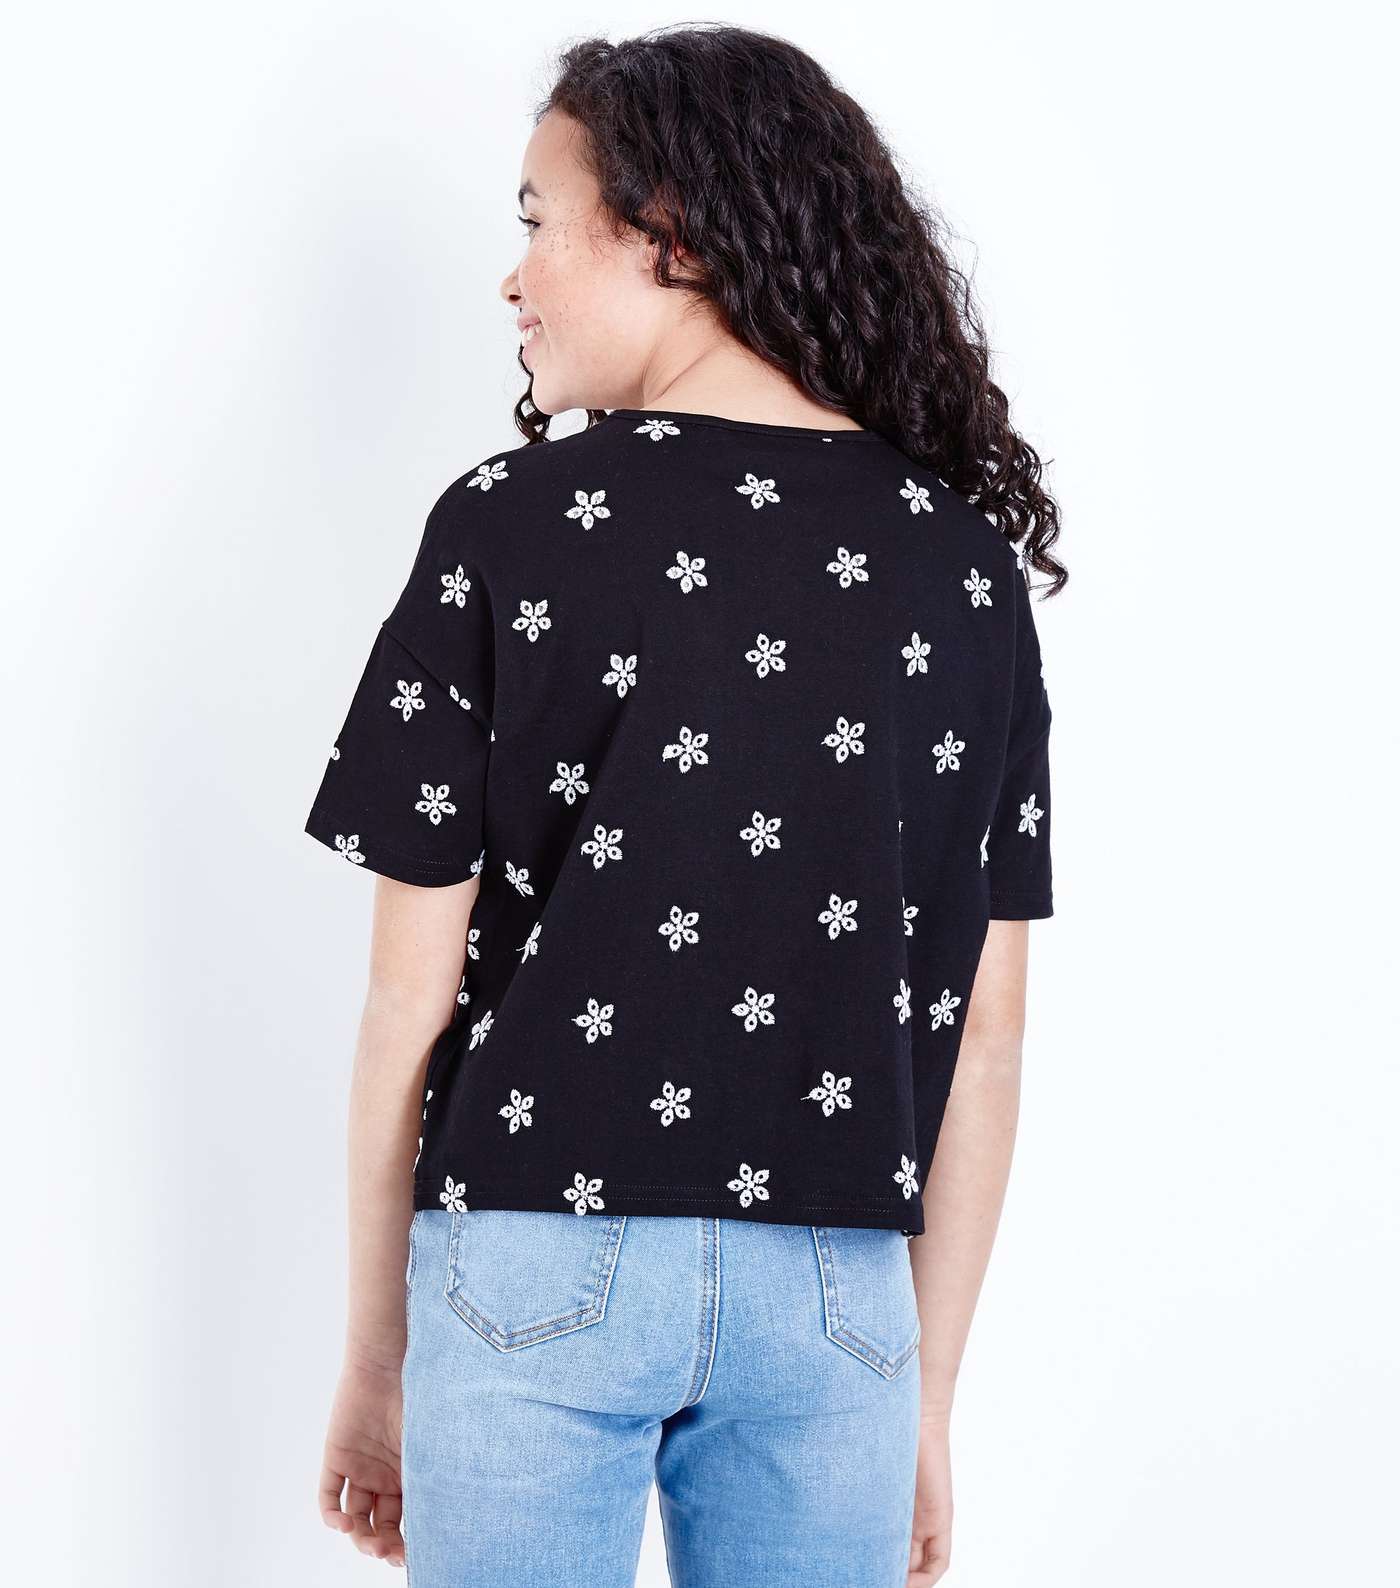 Girls Black Floral Embroidered T-Shirt Image 3